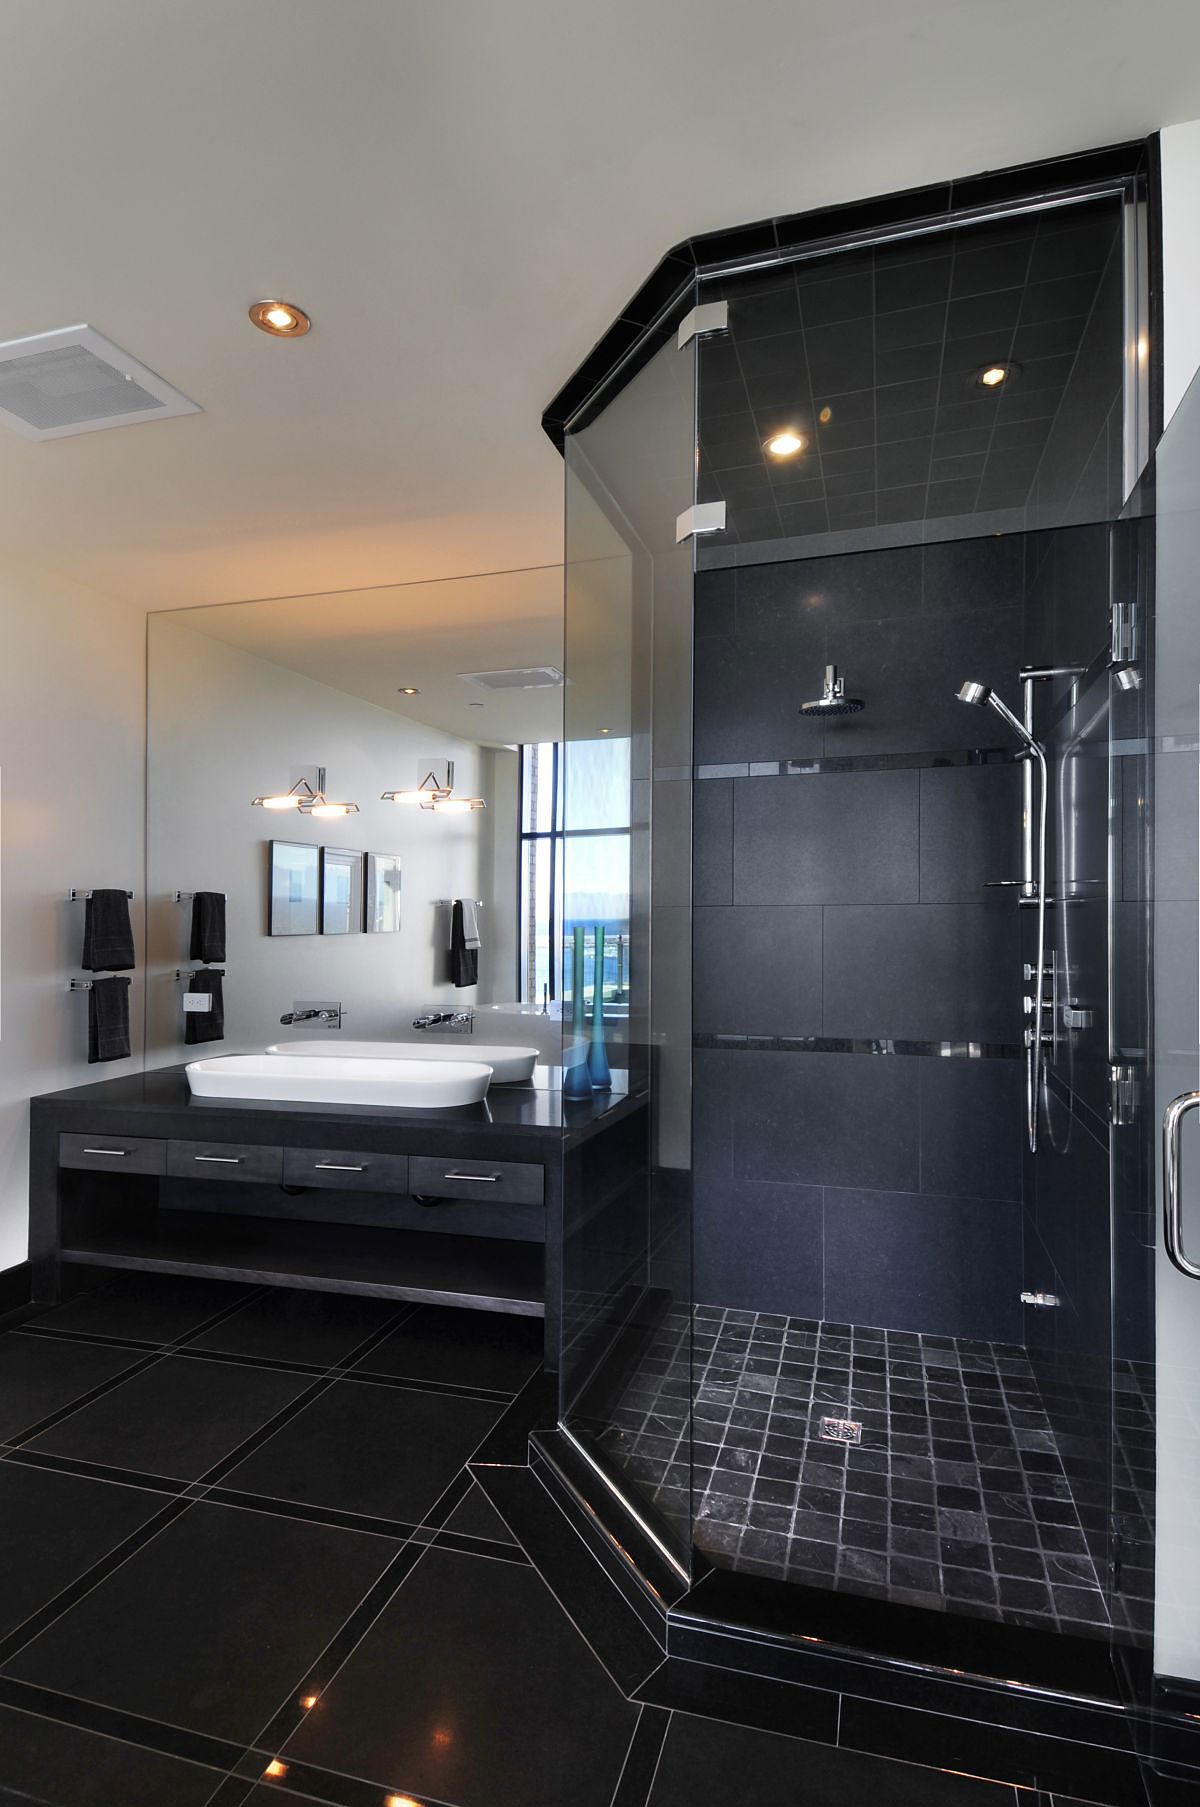 18+ Bathroom Shower Tiles Designs, Ideas | Design Trends - Premium PSD